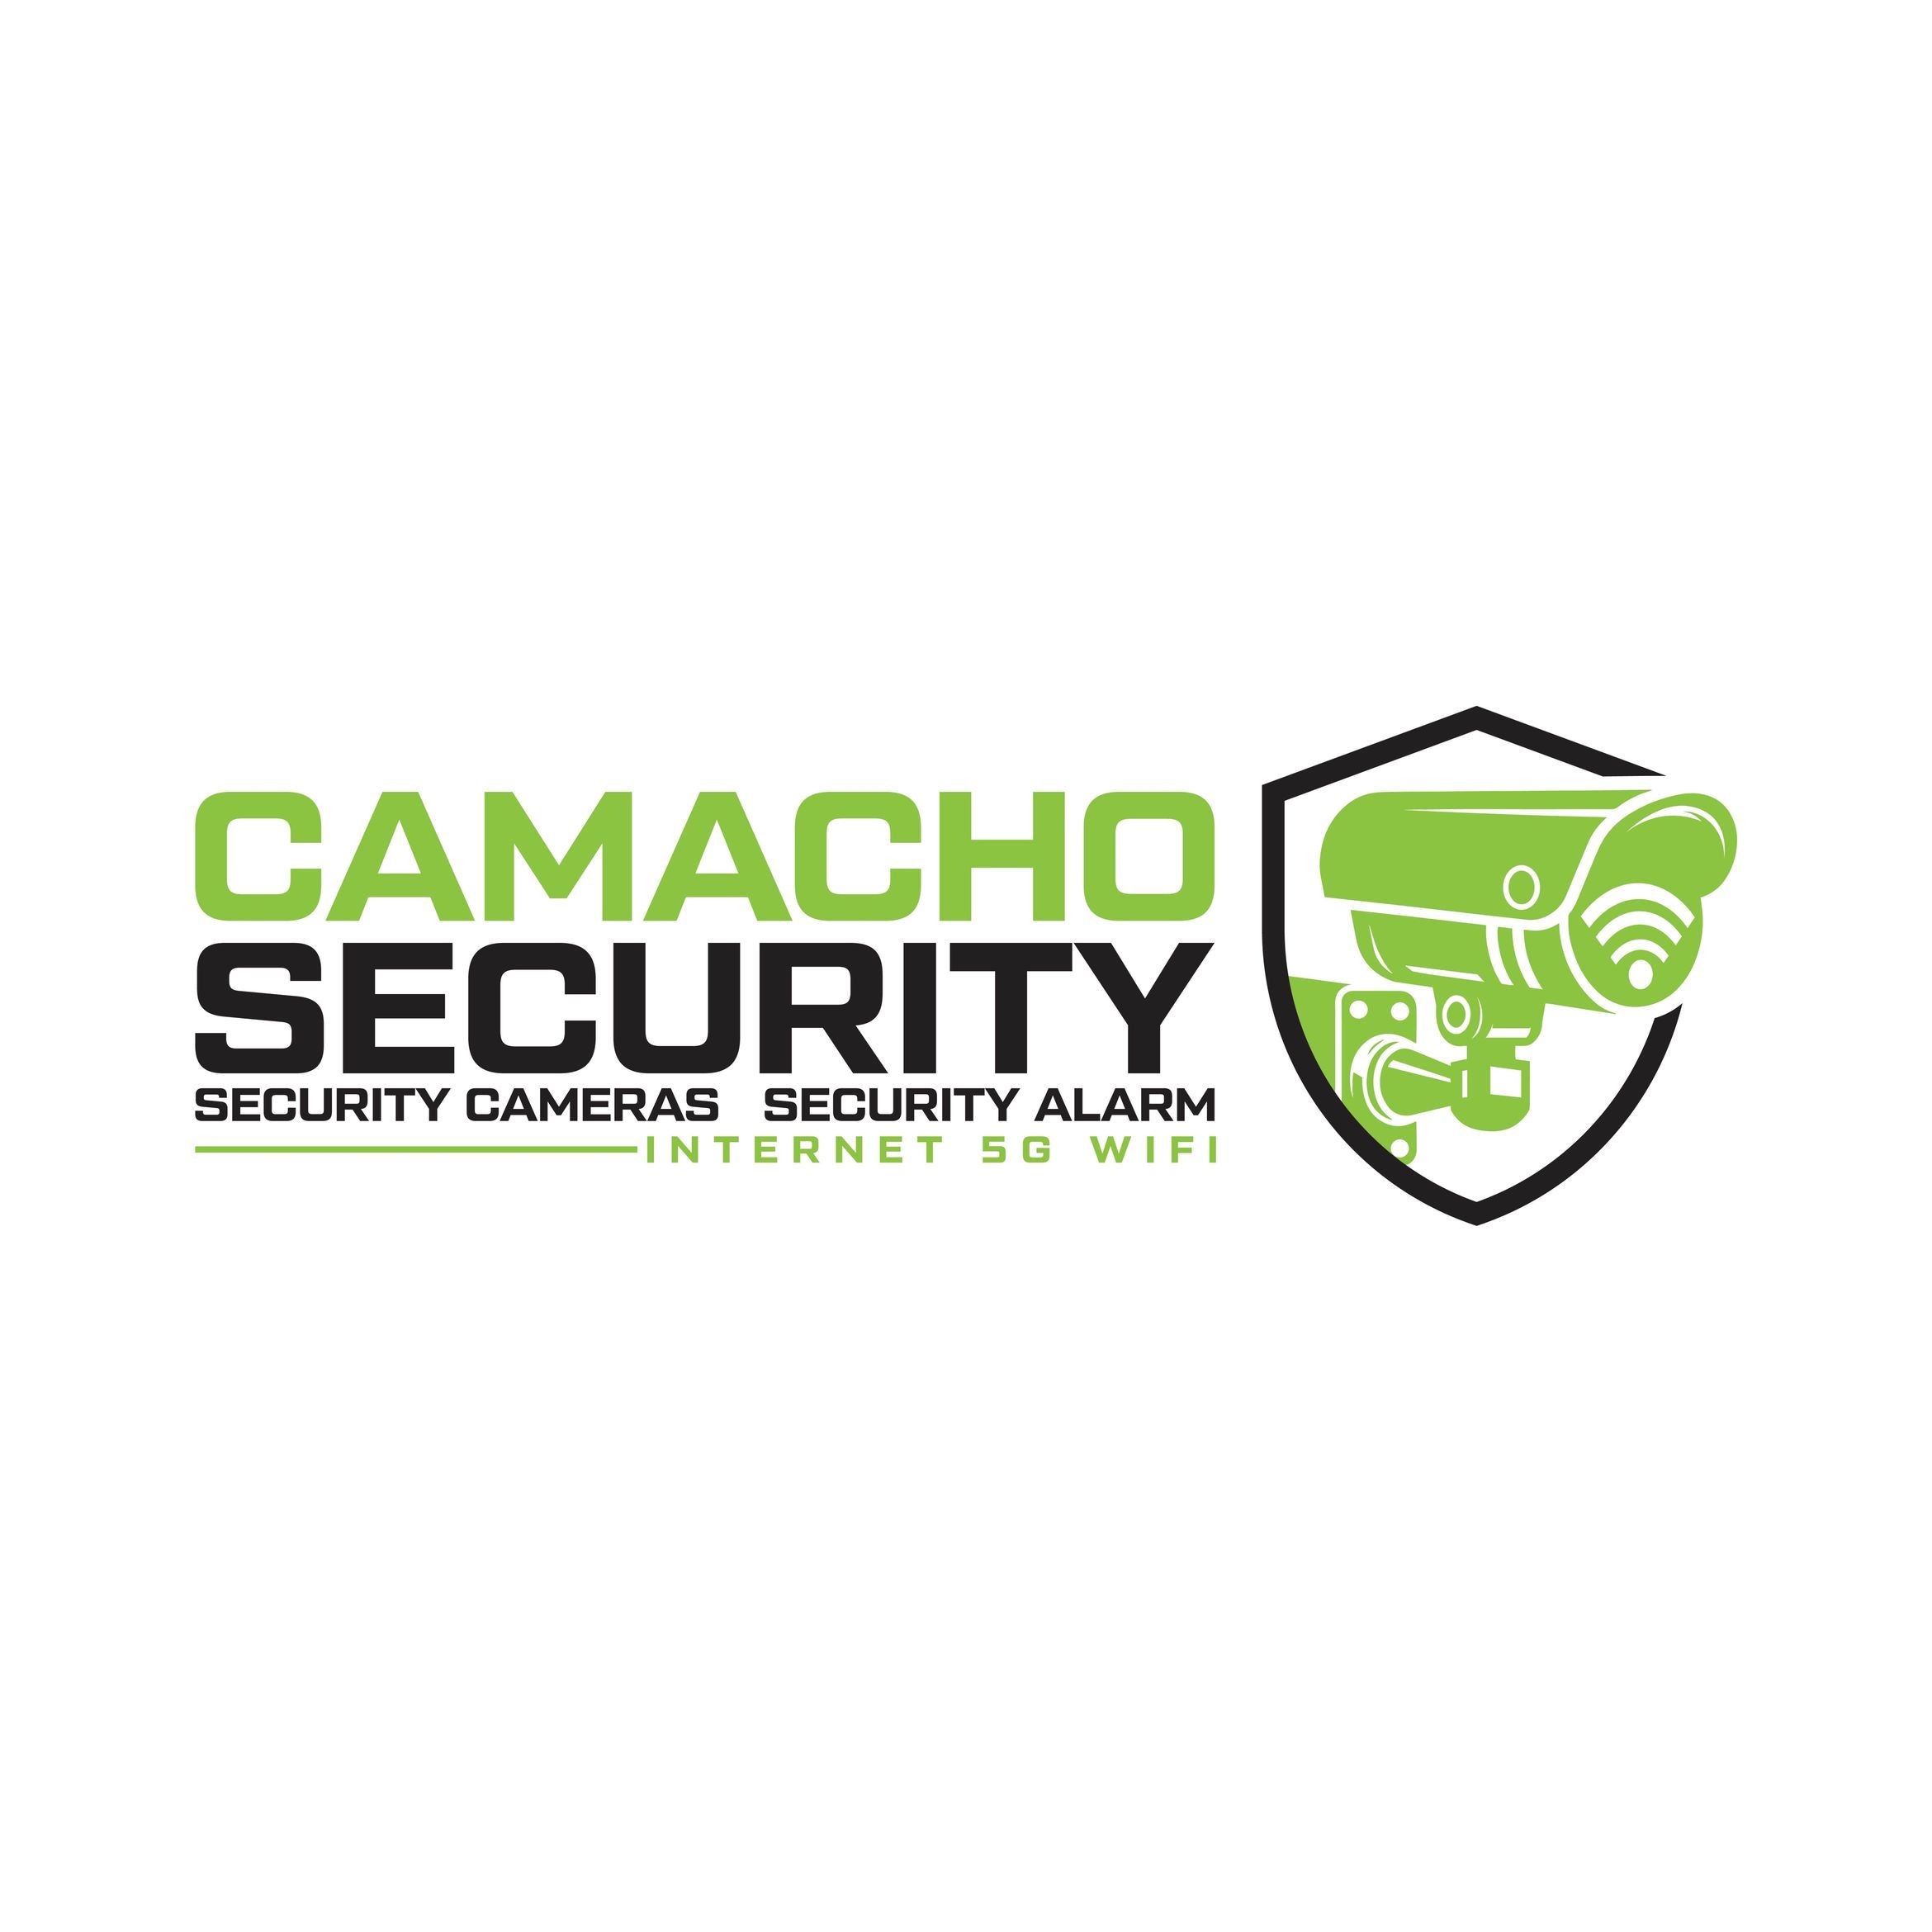 CAMACHO SECURITY LLC, Rochester, 14606